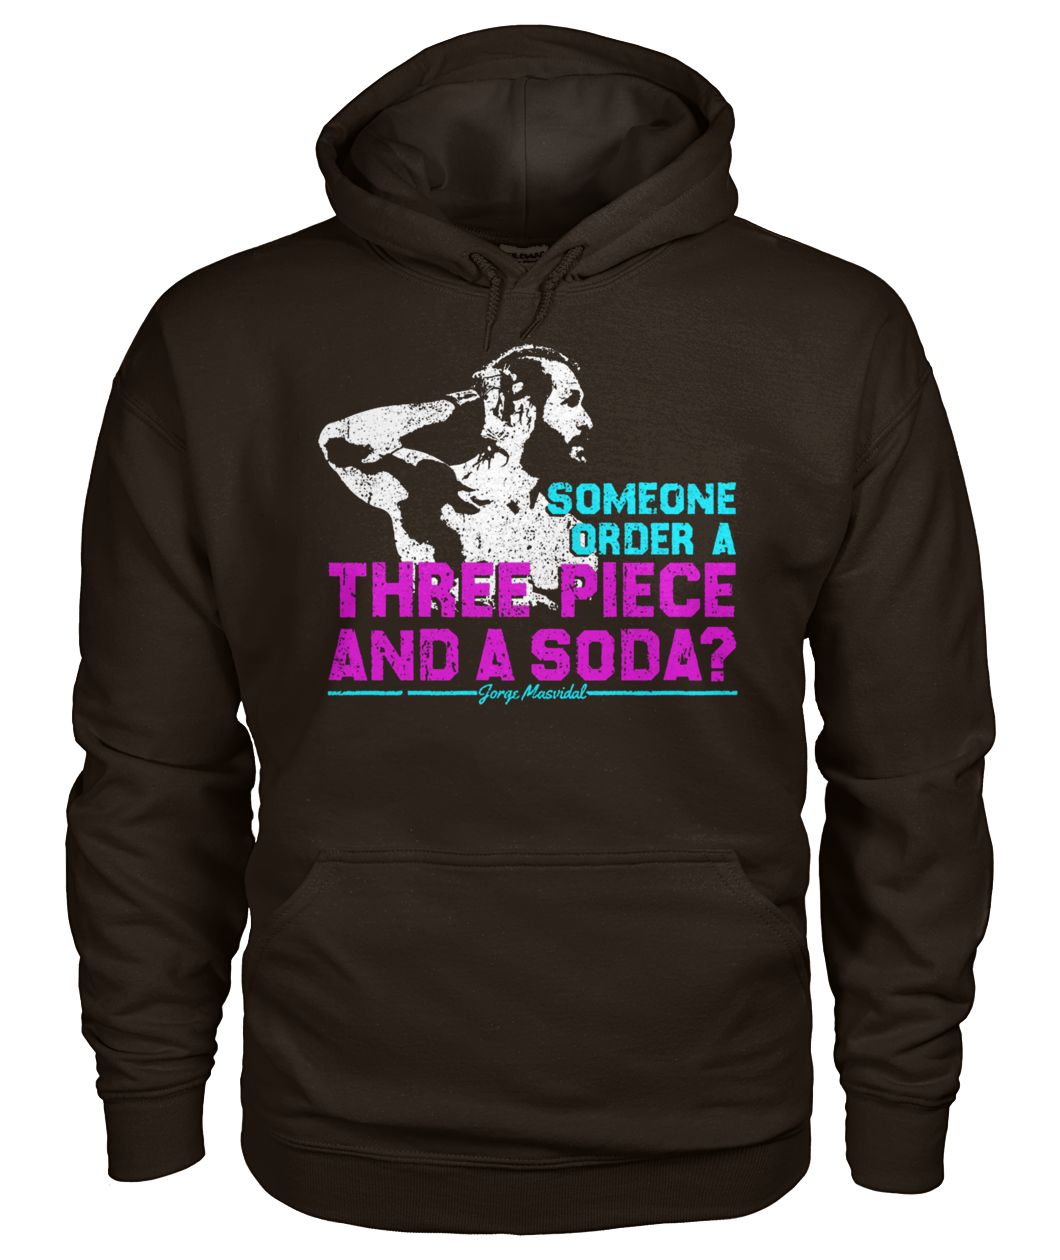 Someone order a three piece and a soda jorge masvidal gildan hoodie